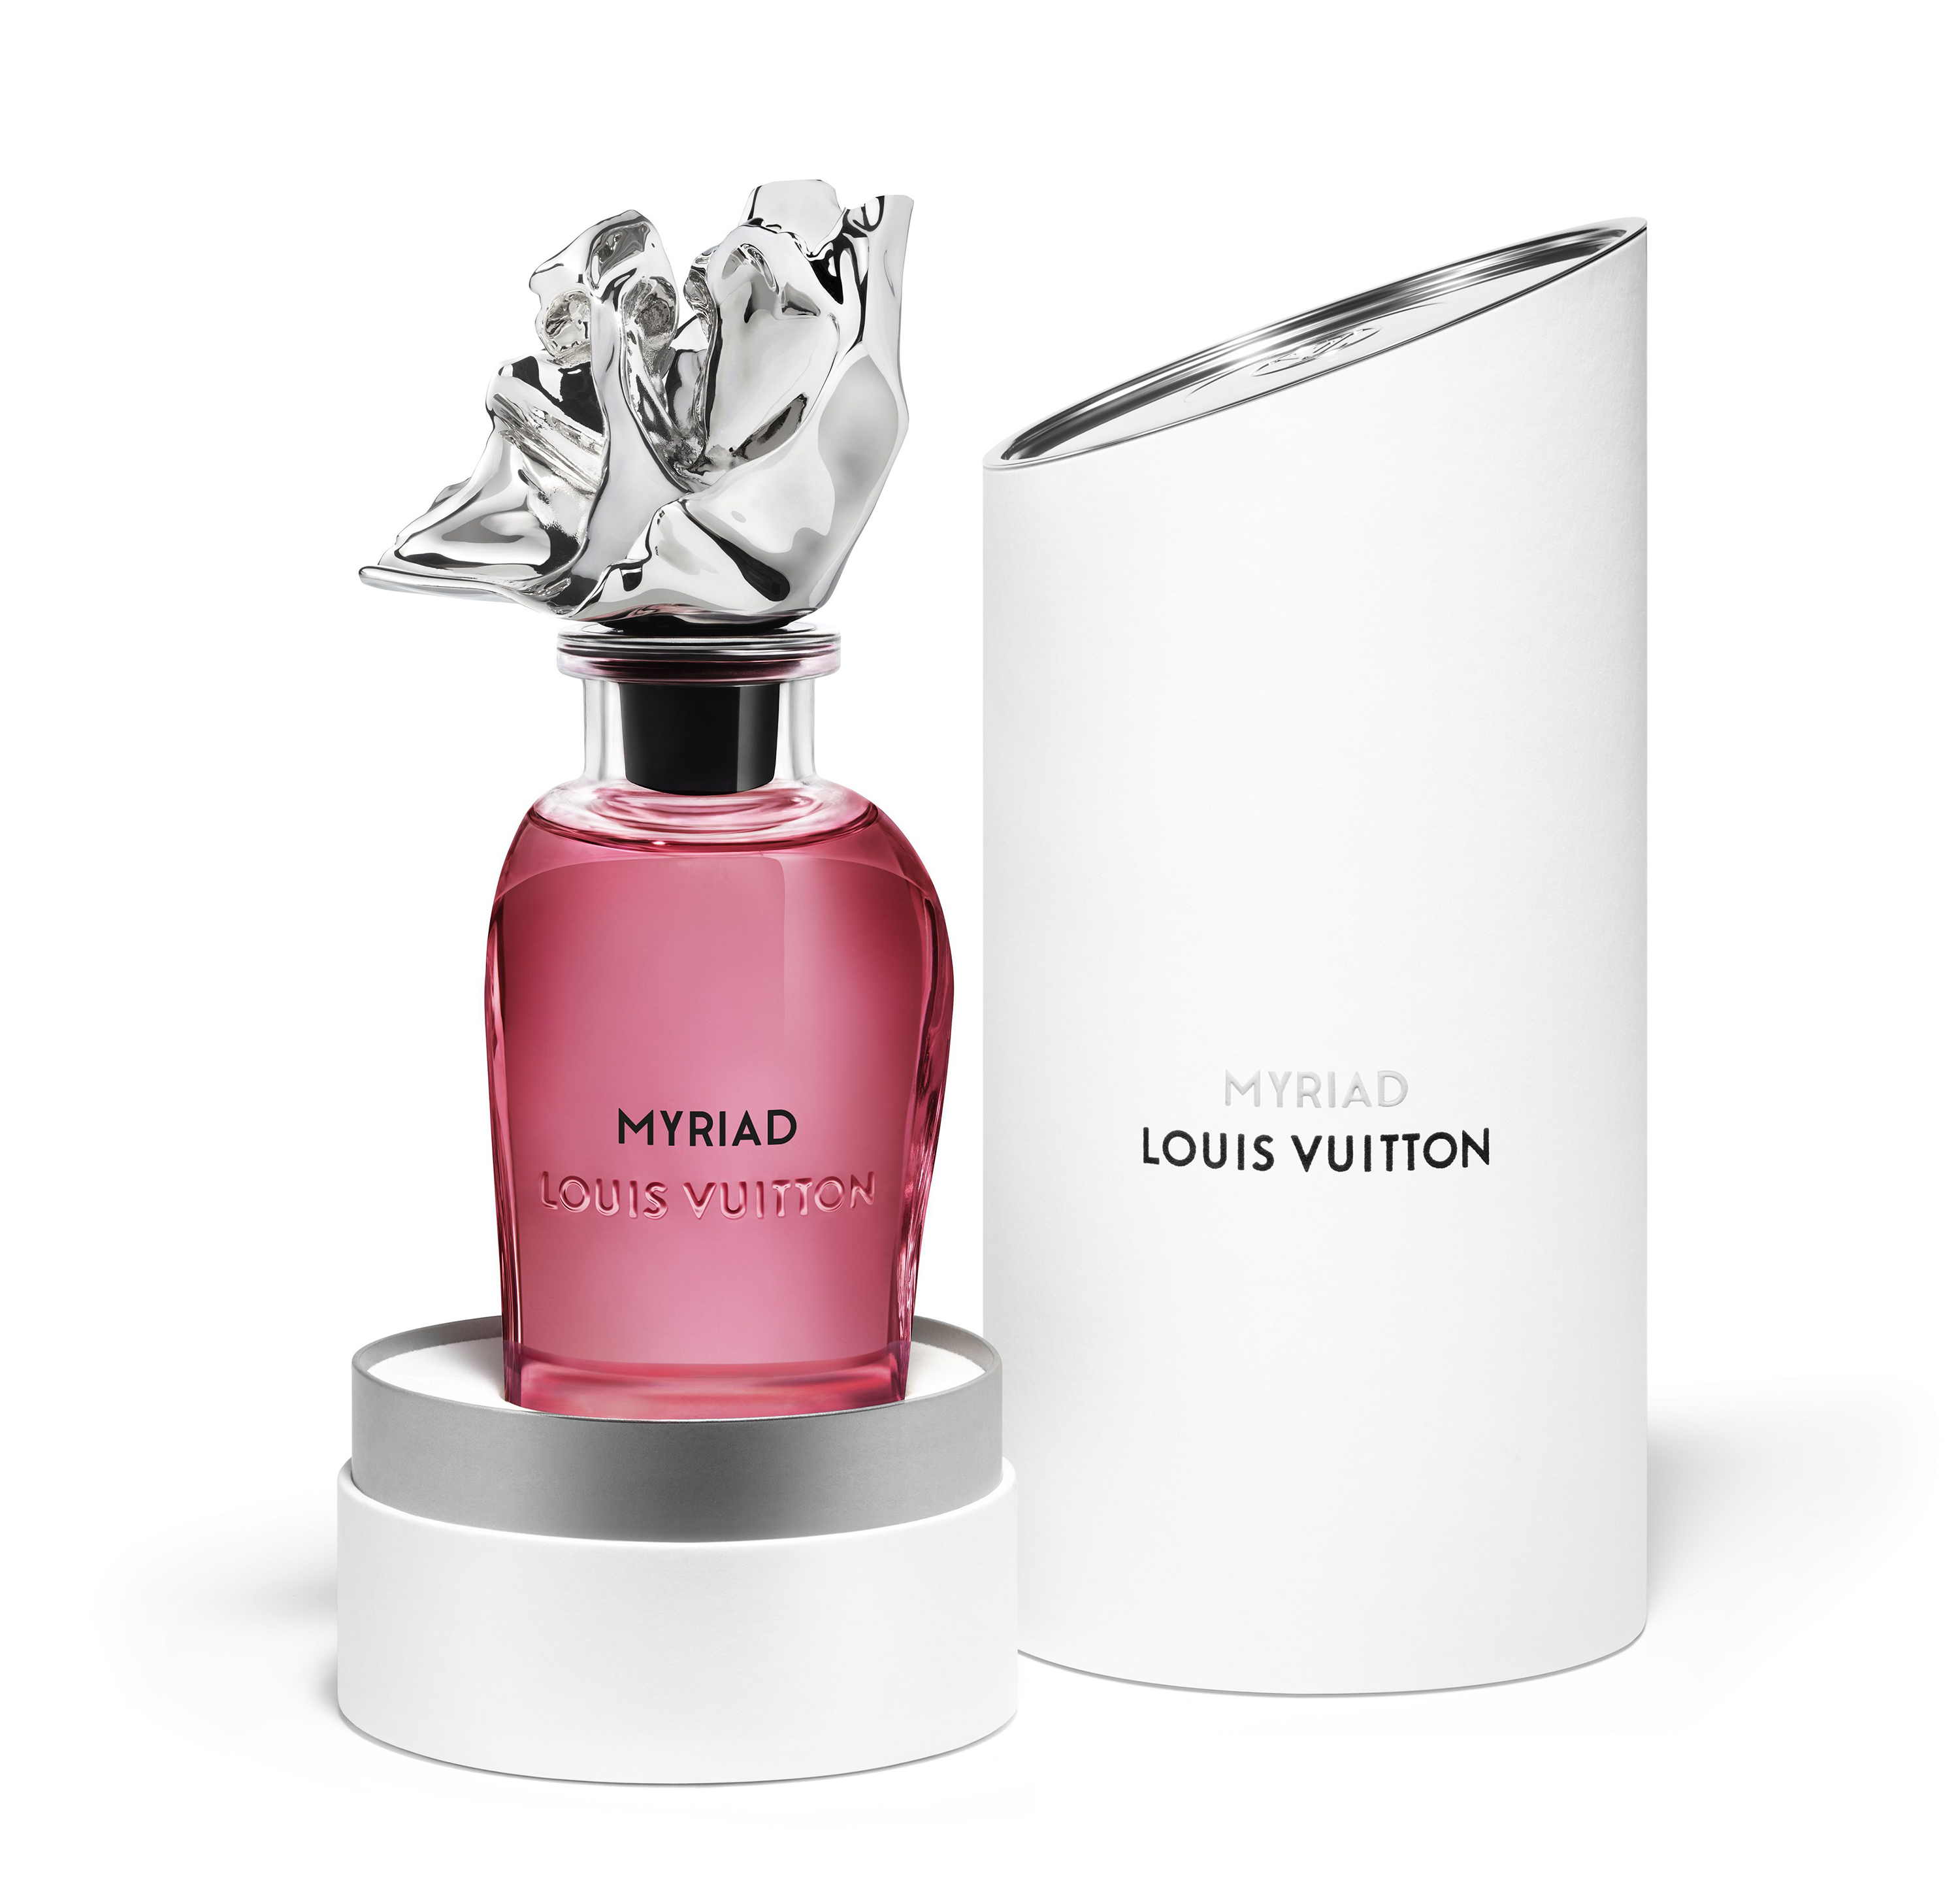 Louis Vuitton lavora al suo primo profumo